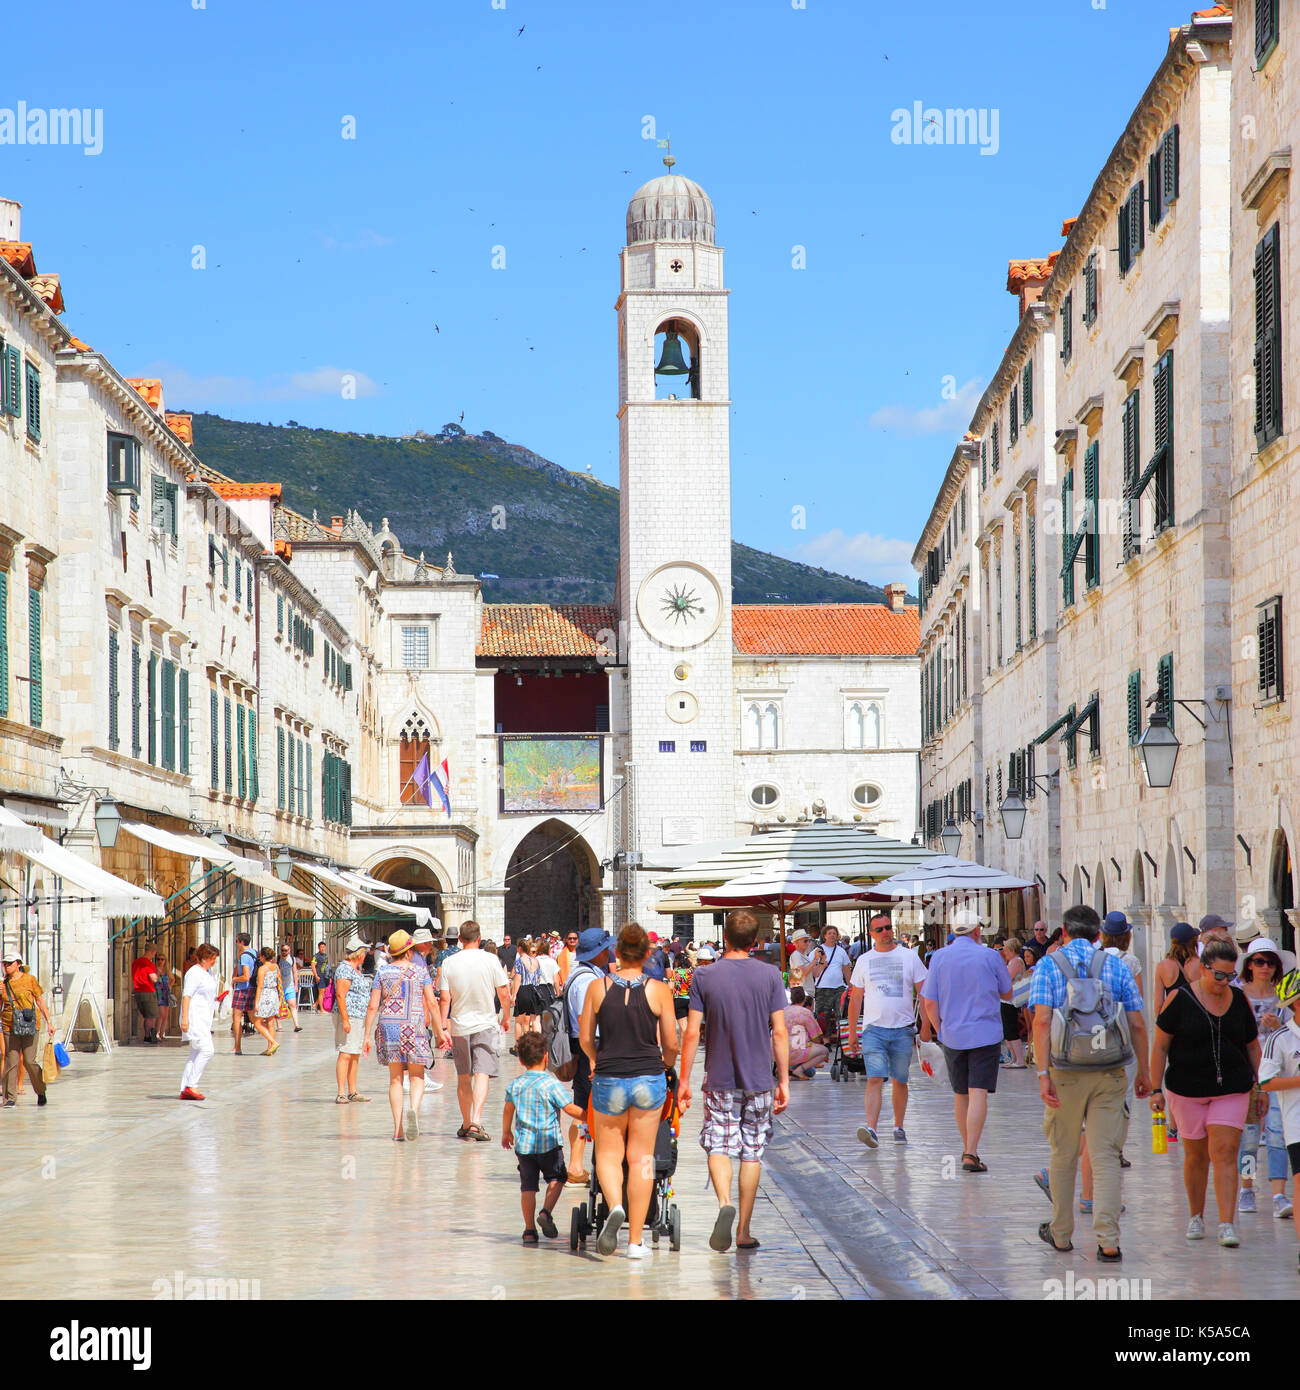 Dubrovnik, Croatia - Jine 11, 2017: Tourists in Stradun street in Old Town of Dubrovnik Stock Photo